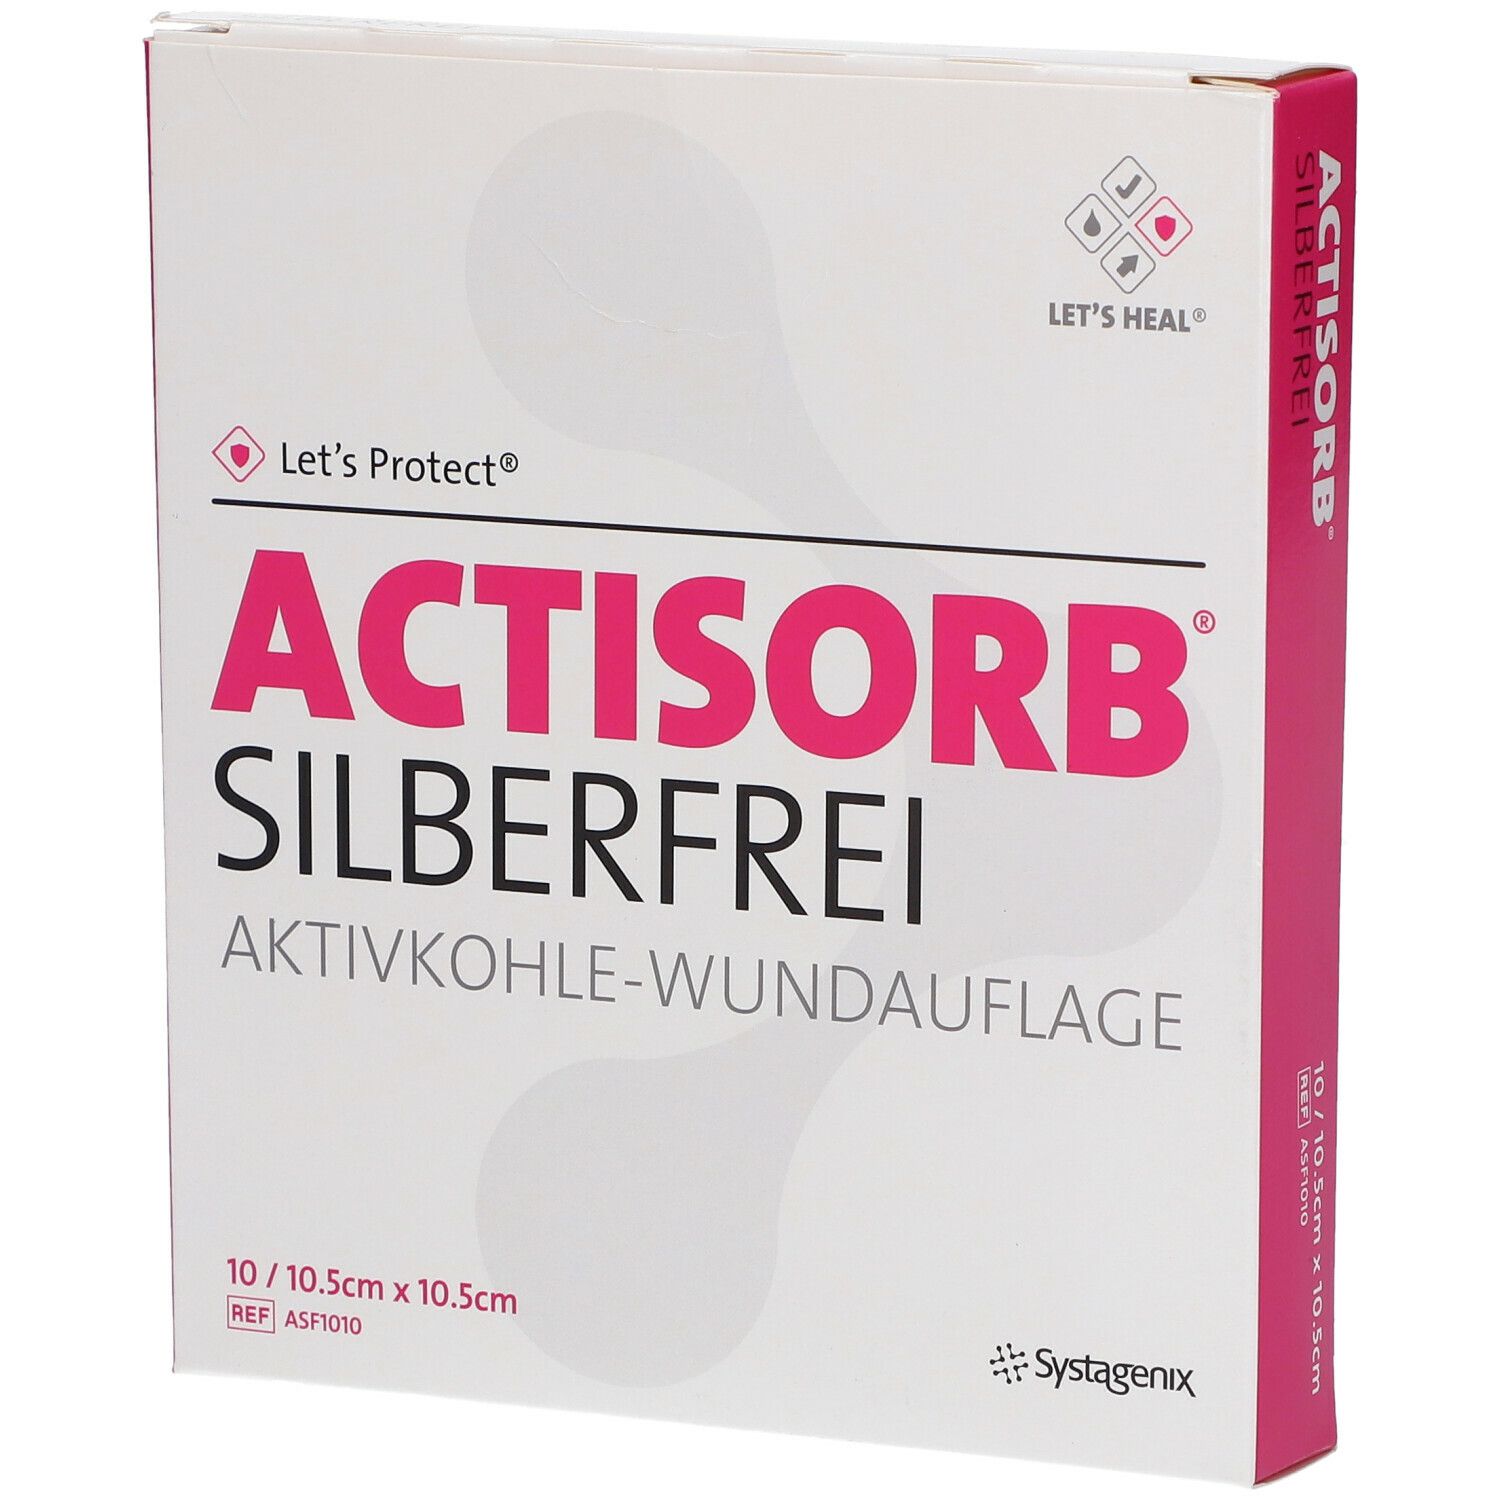 Actisorb® Silberfrei 10,5 x 10,5 cm